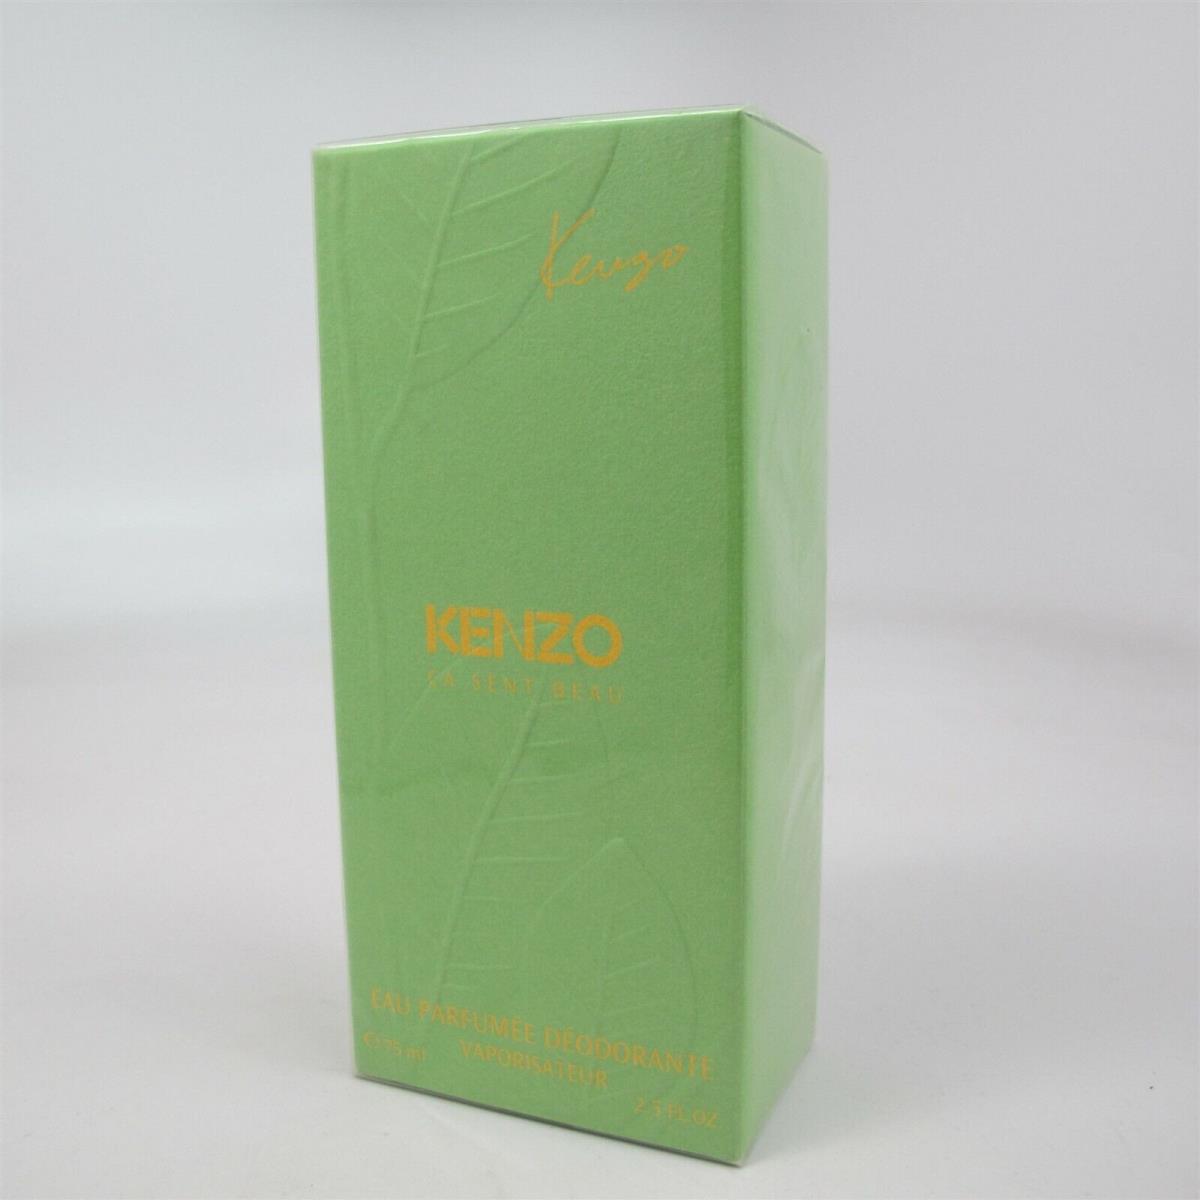 CA Sent Beau by Kenzo 75 Ml/ 2.5 oz Perfumed Deodorant Spray